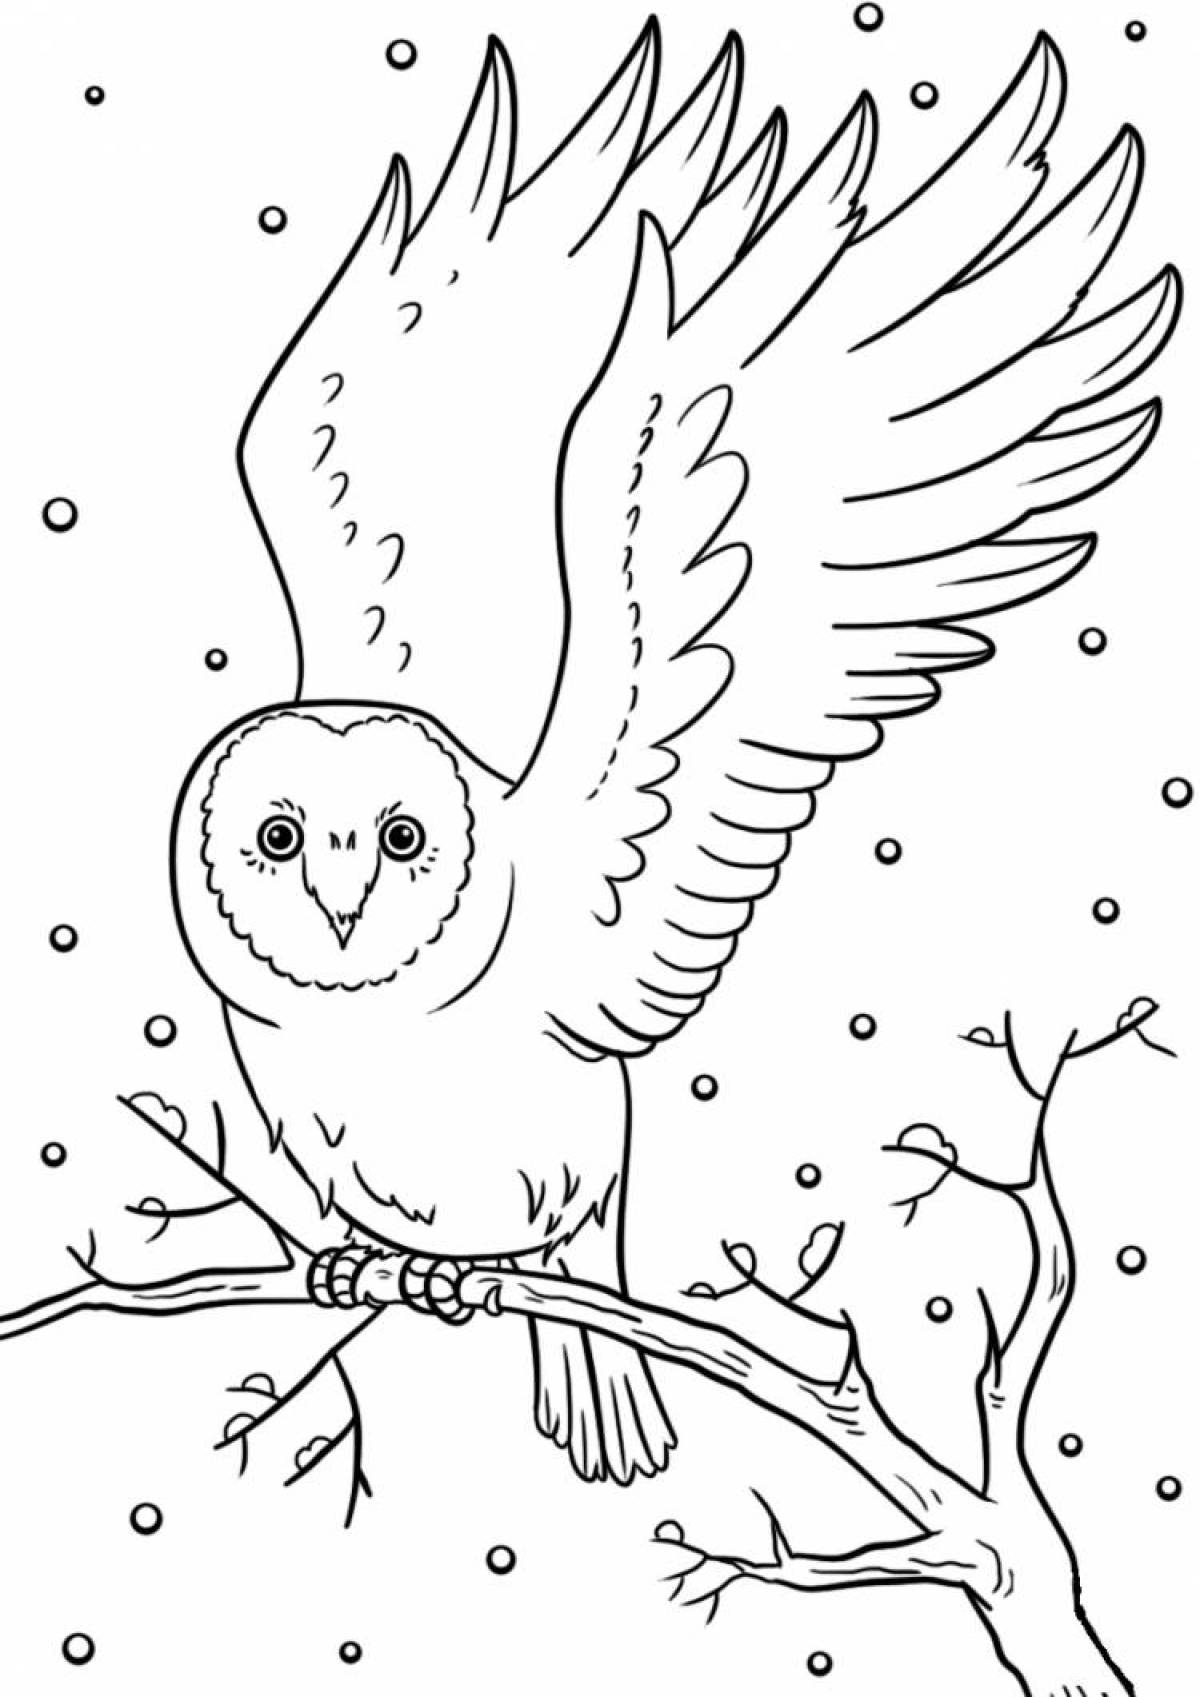 Fancy winter birds coloring page